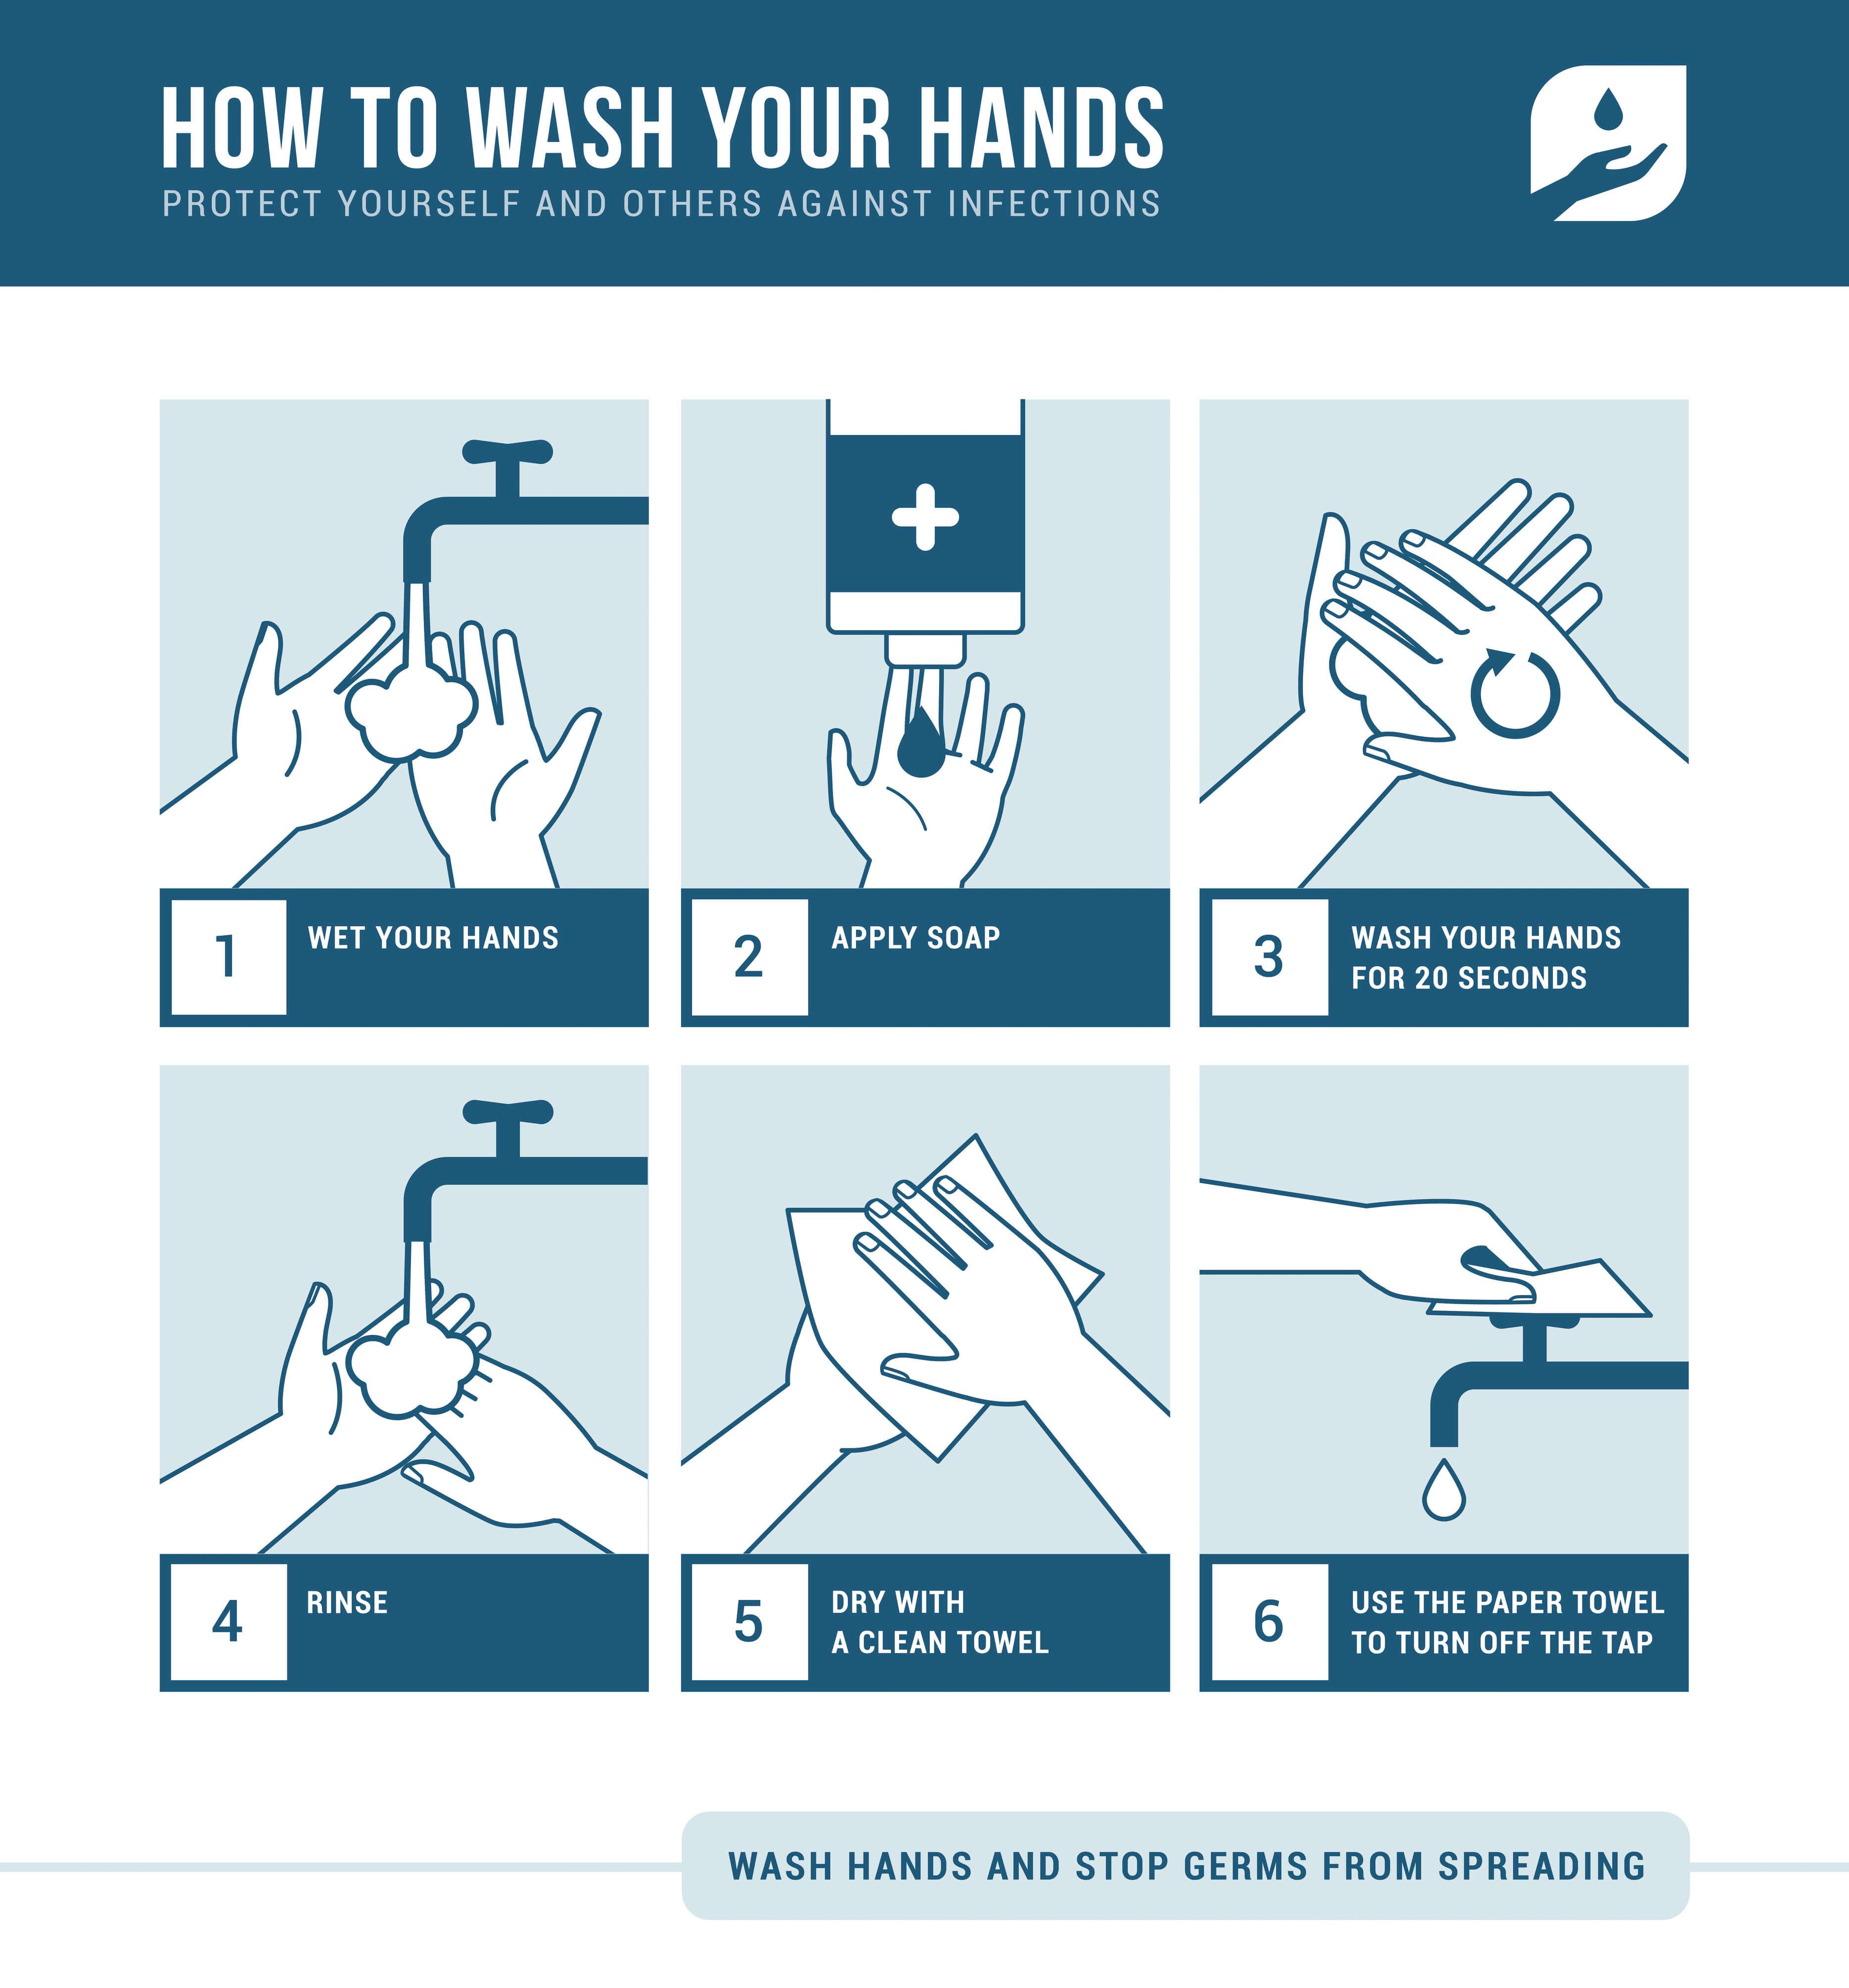 ICE Cobotics washing hand guide